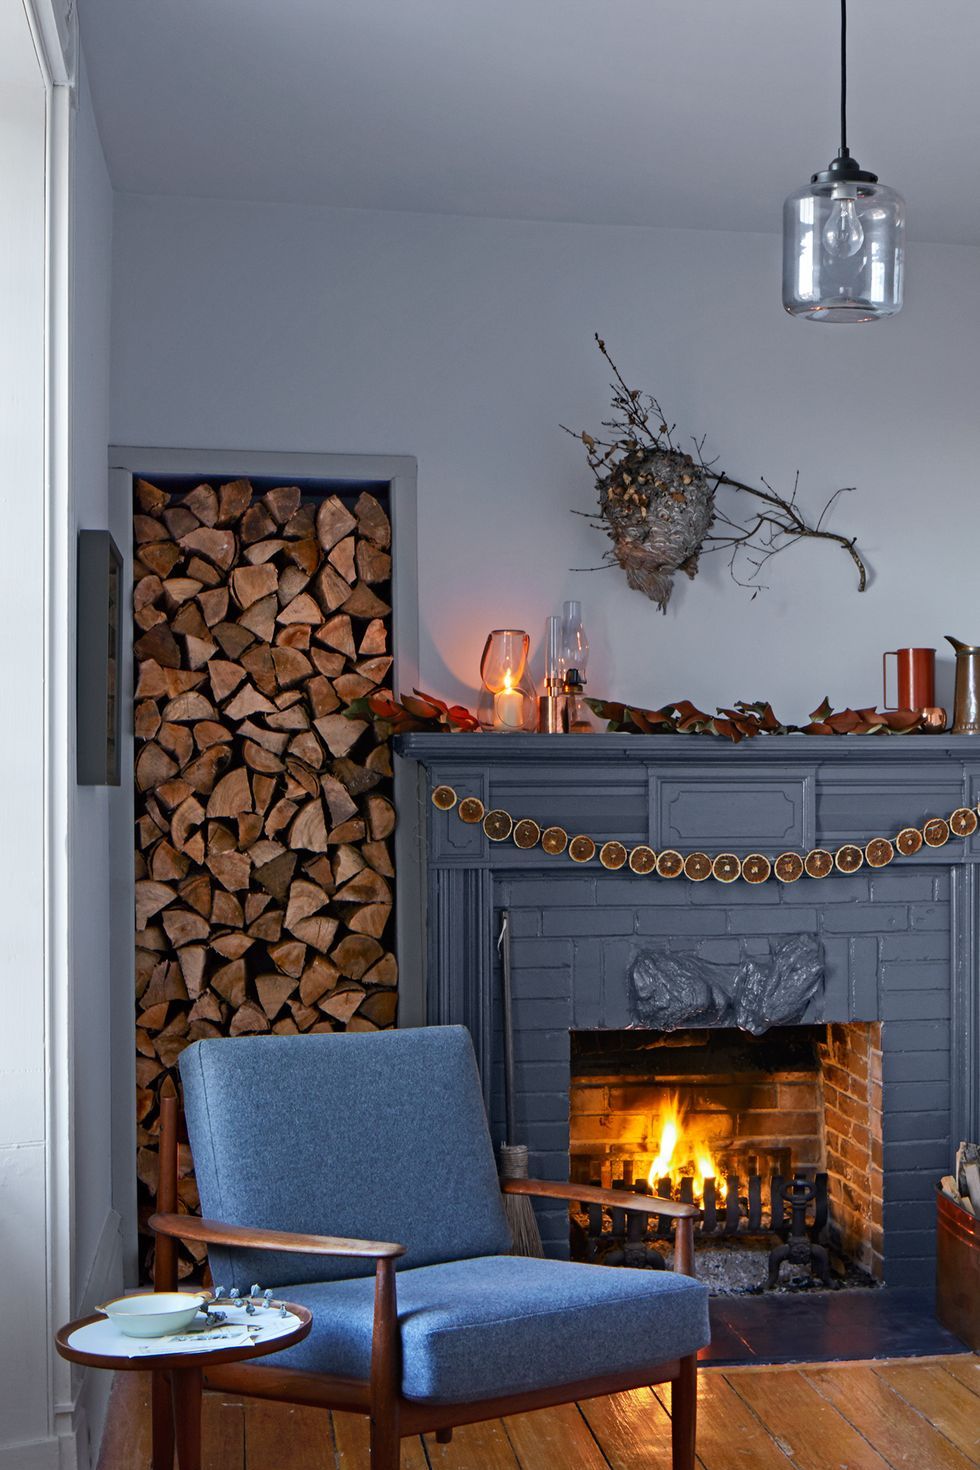 6 Fun Design Ideas For a Custom Fireplace Mantel